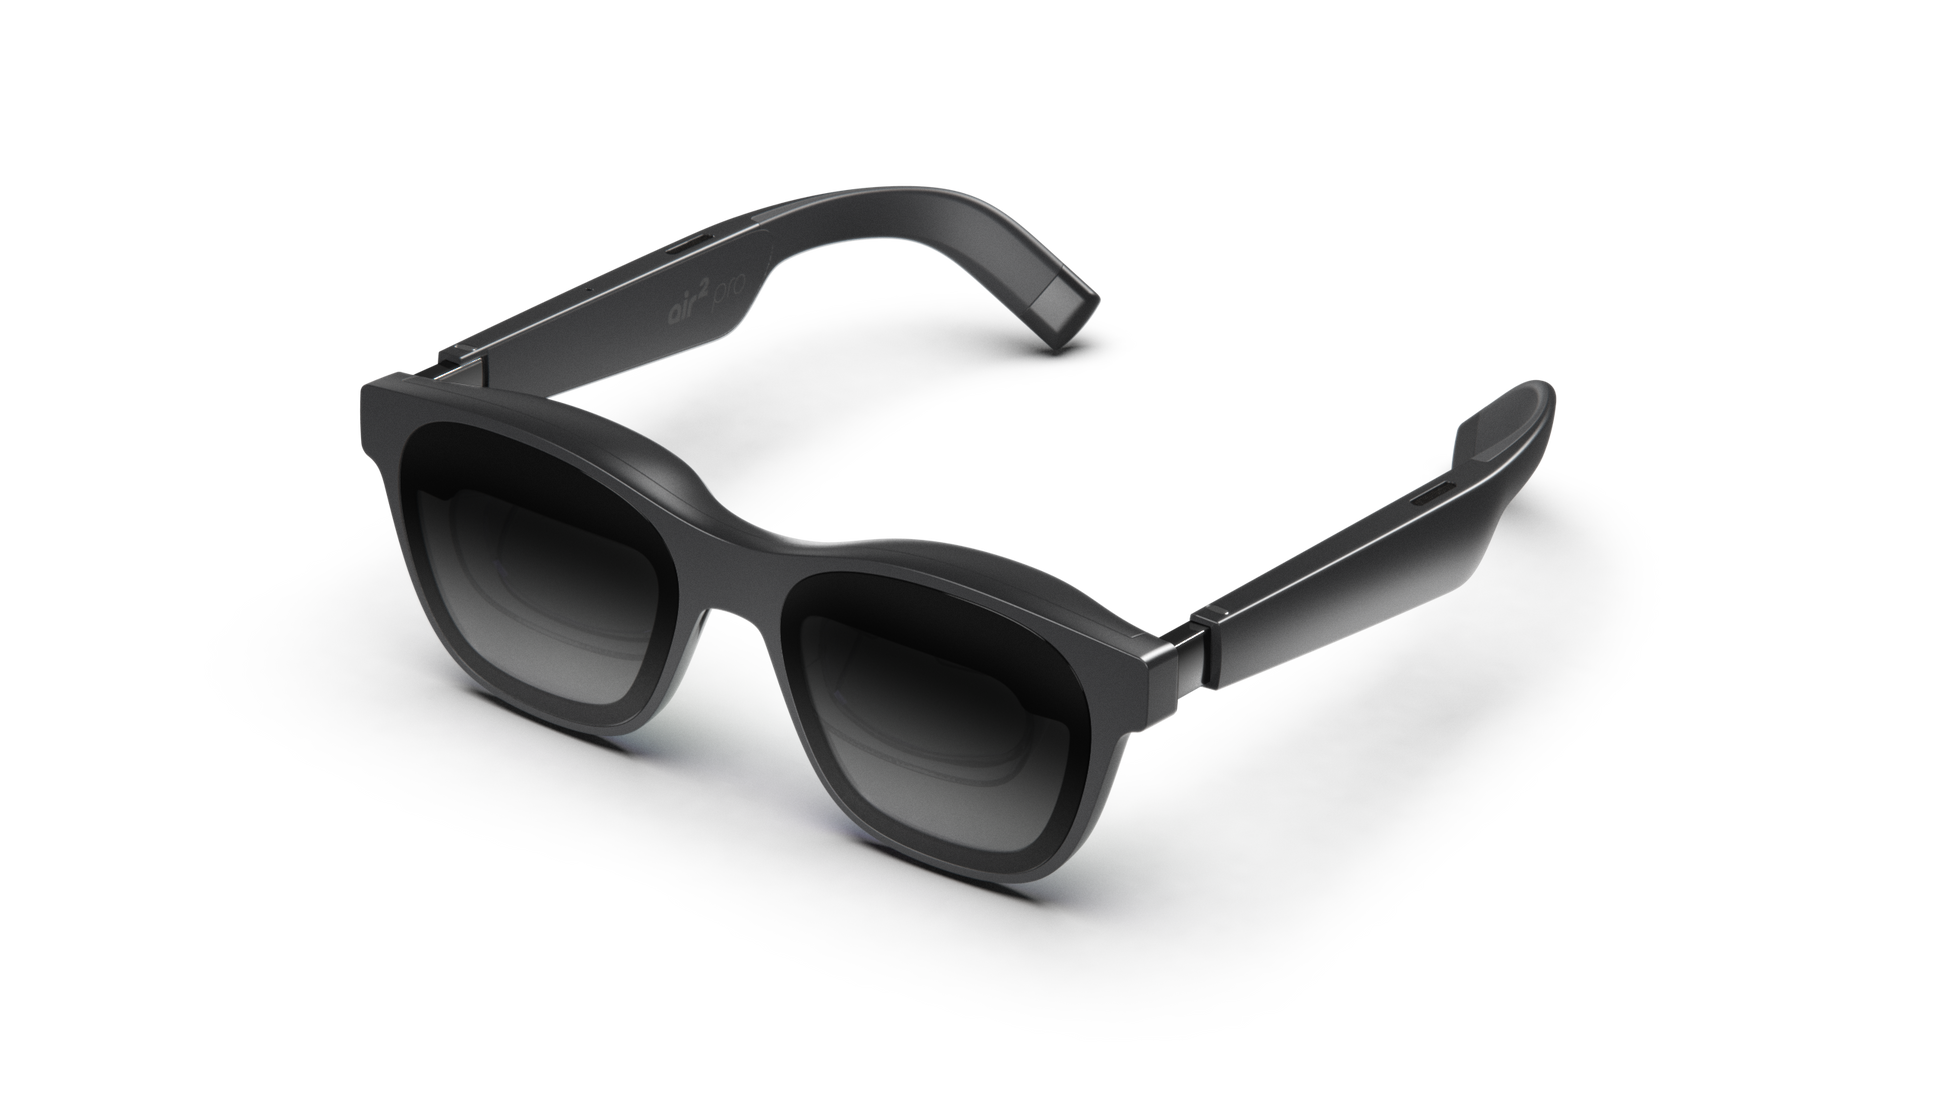 XREAL(NREAL) Air 2 Pro AR Smart Glasses wearable display – WAFUU JAPAN